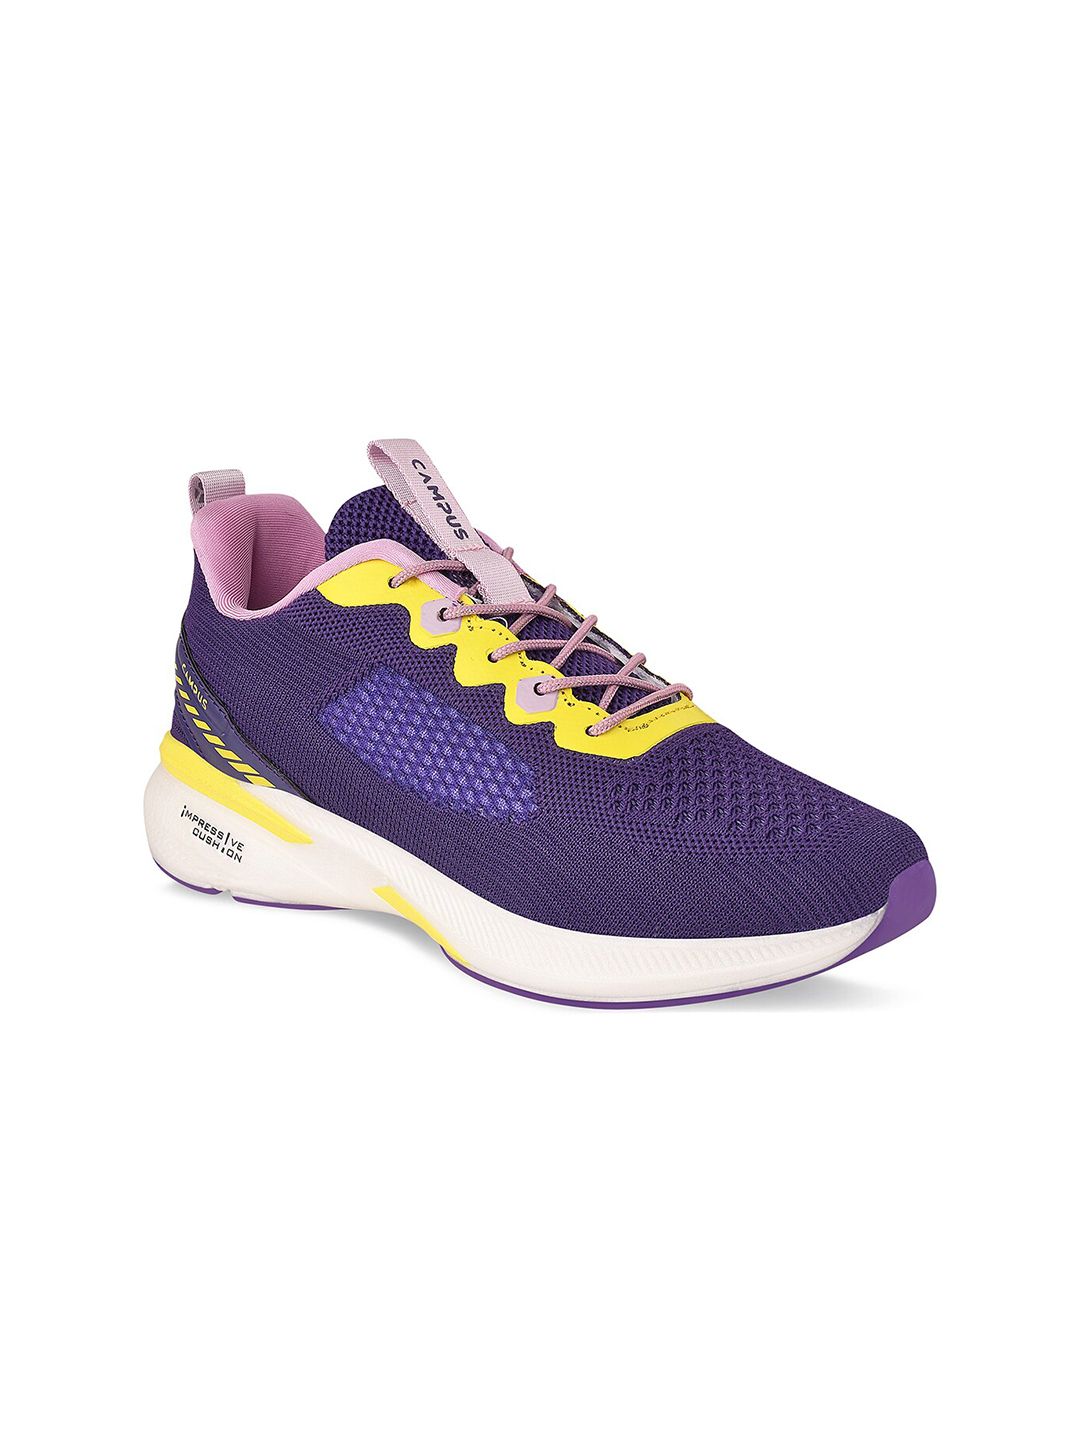 Campus Women Purple Mesh Running Shoes Price in India